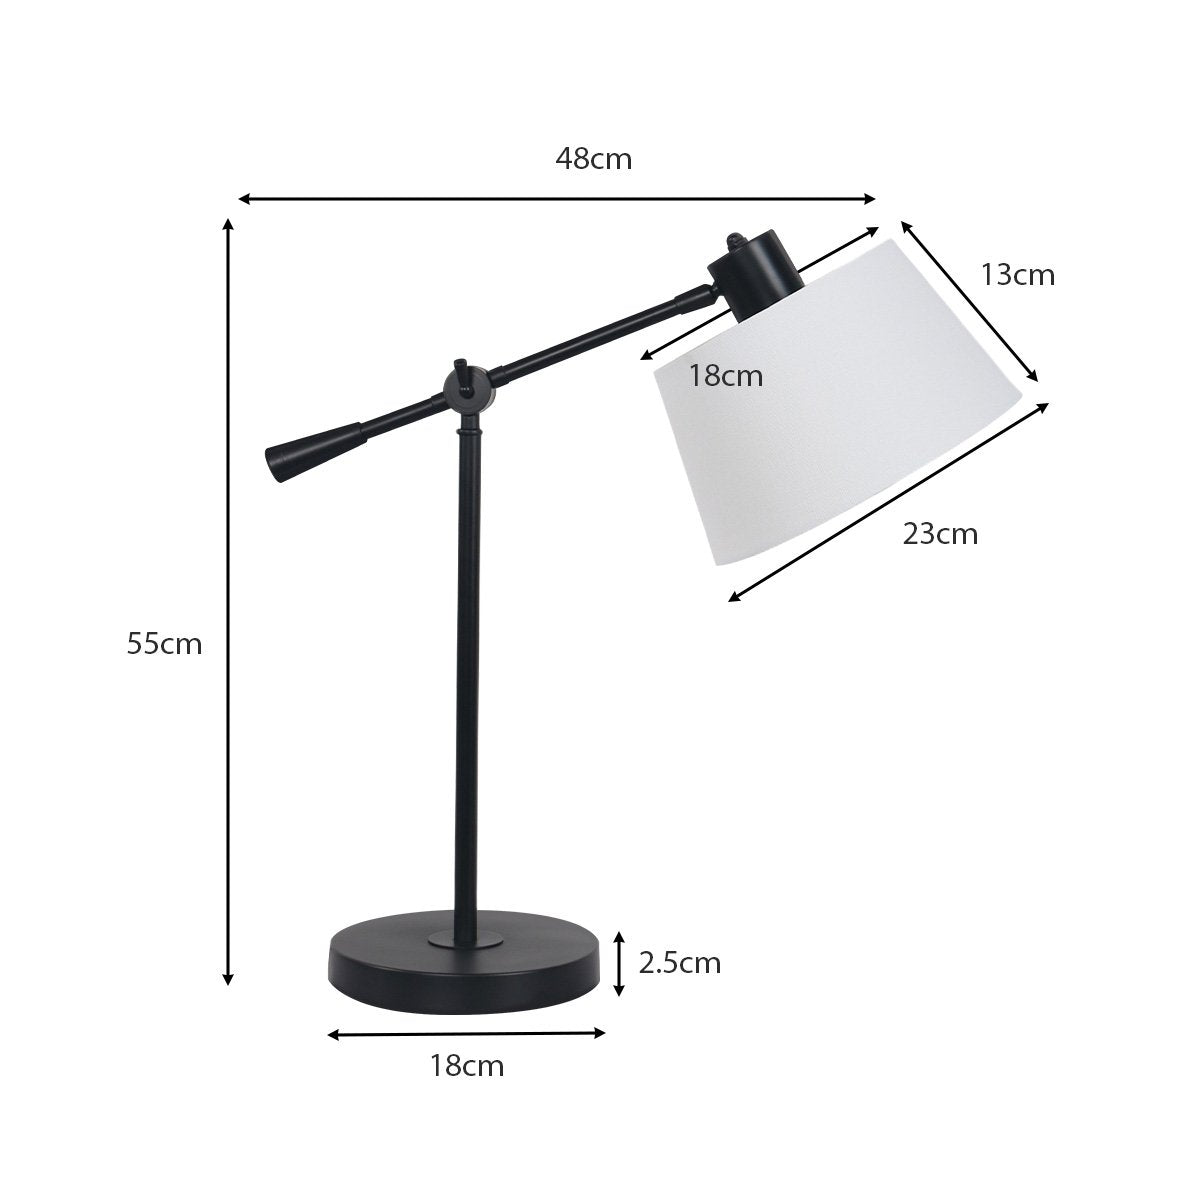 Sarantino Adjustable Metal Table Lamp In Black - BM House & Garden